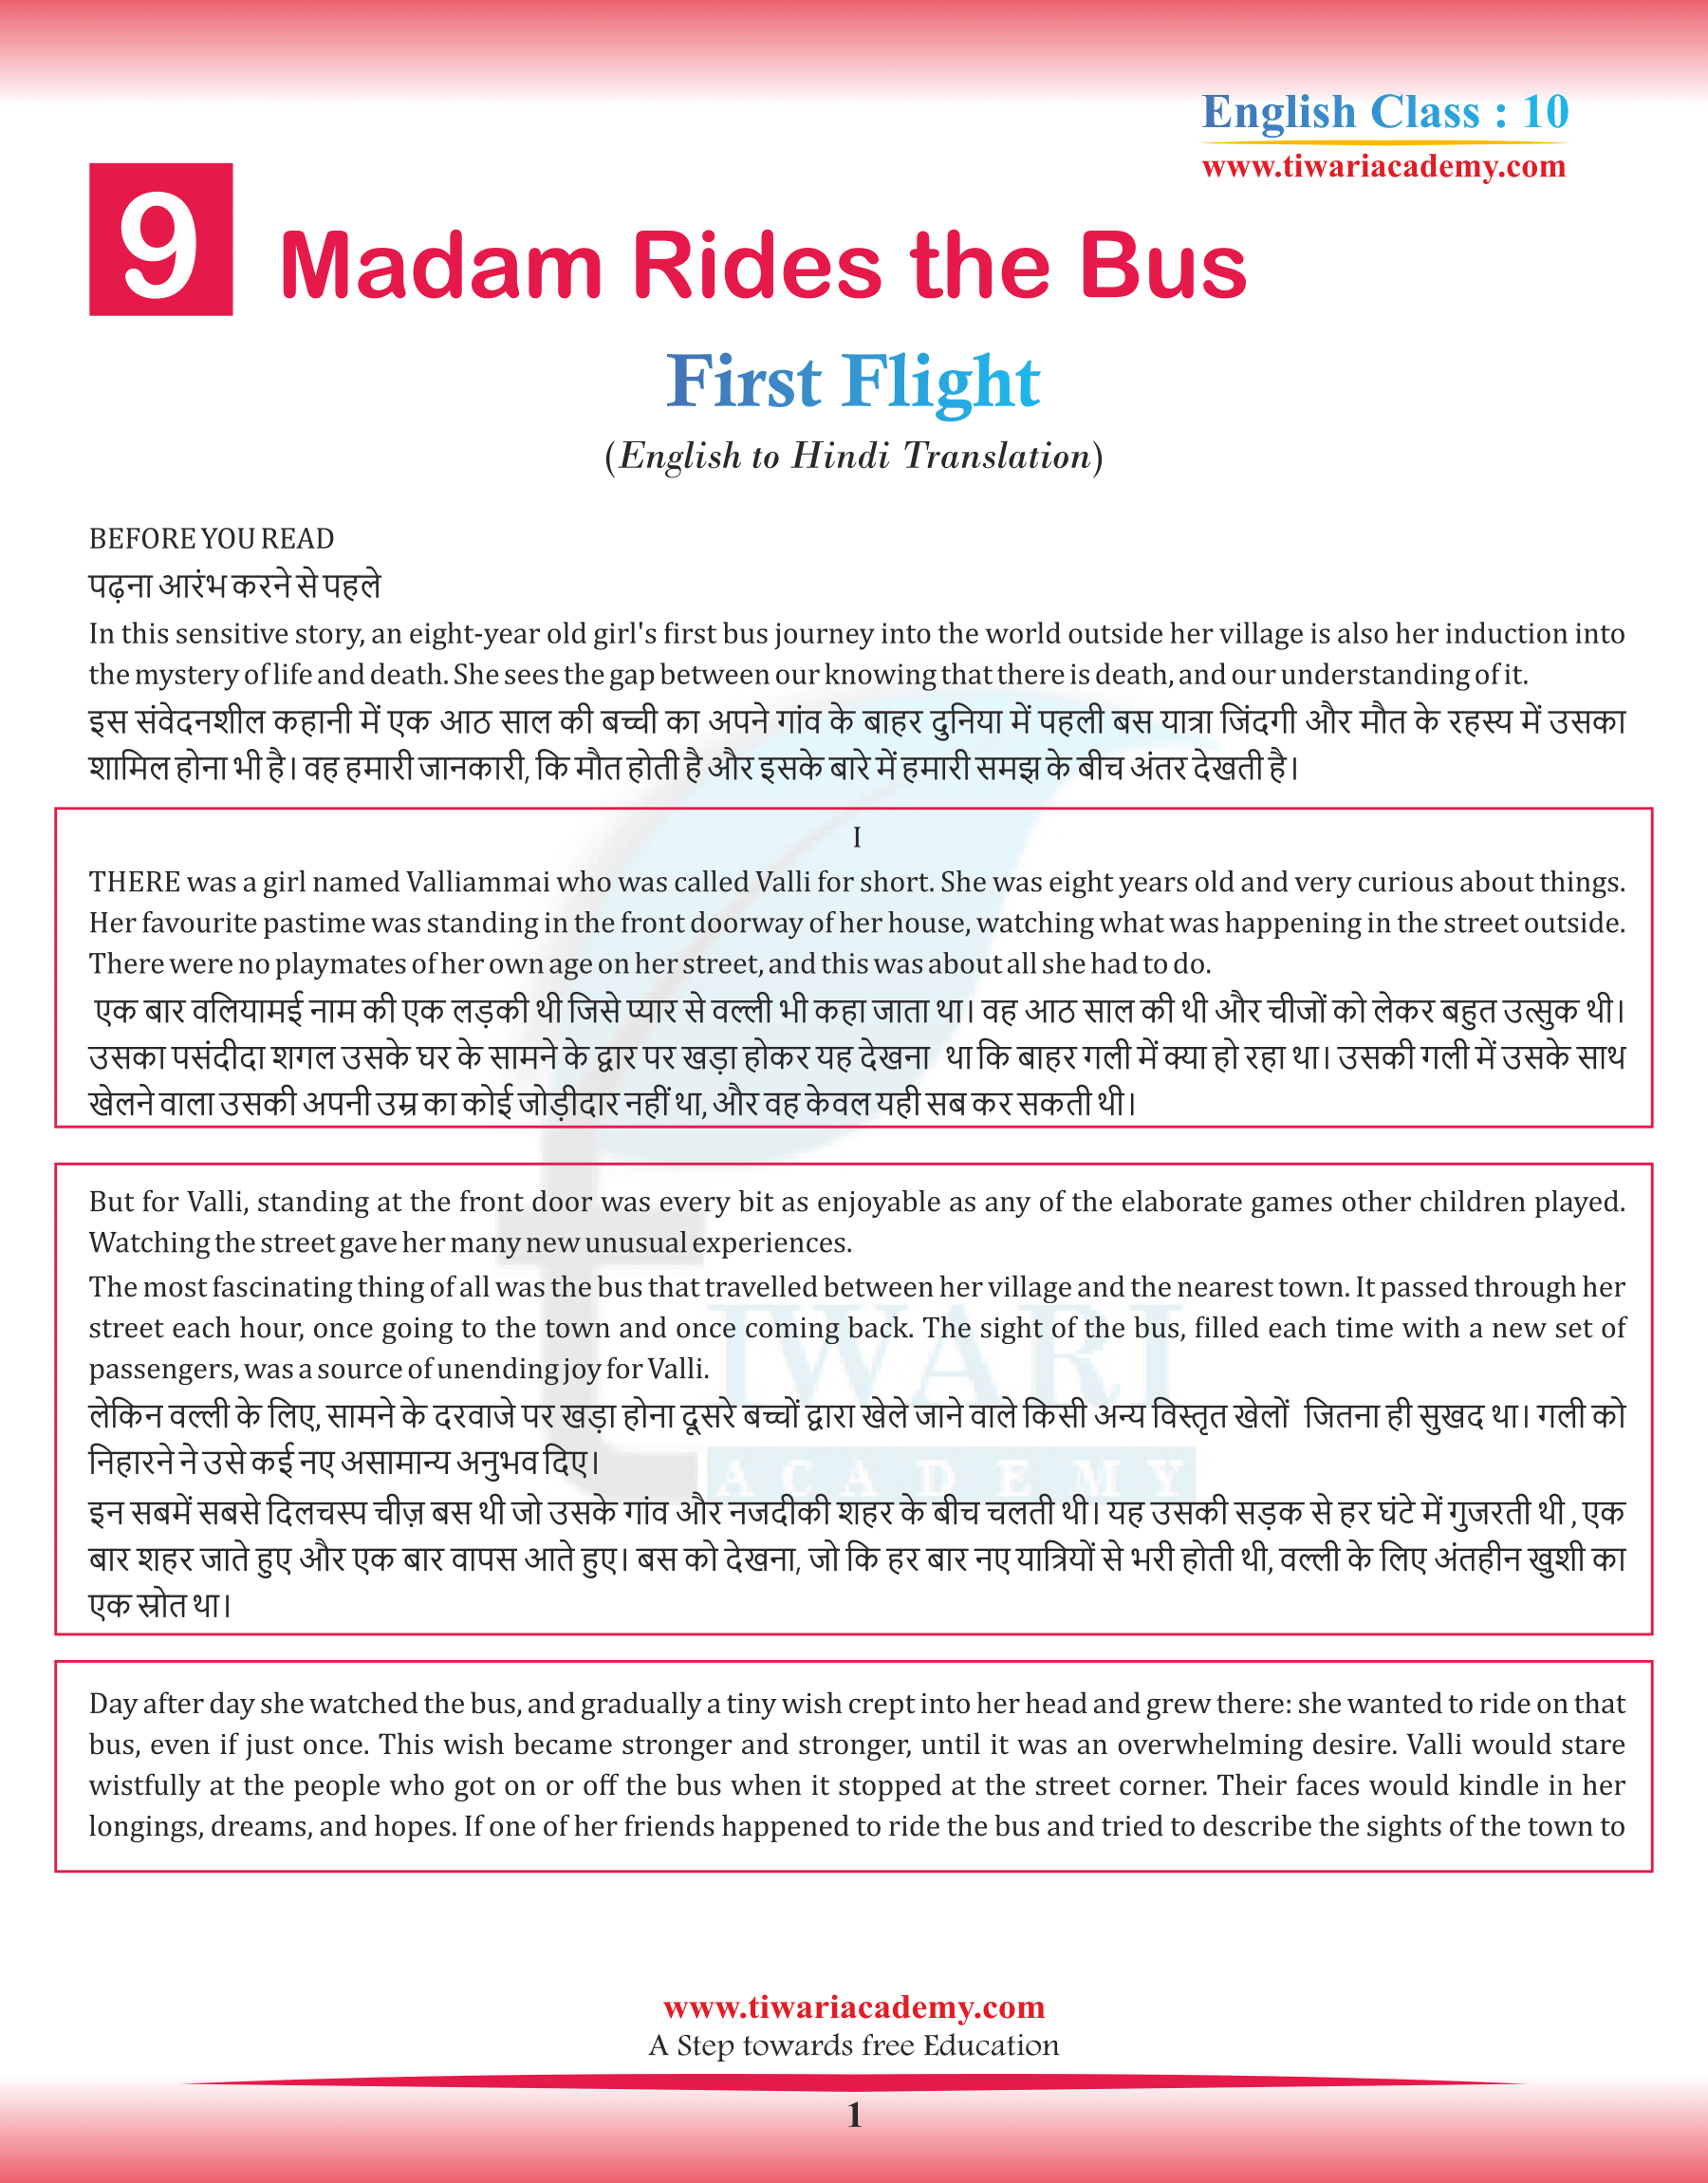 Class 10 English First Flight Chapter 9 Madam Rides the Bus in Hindi Medium